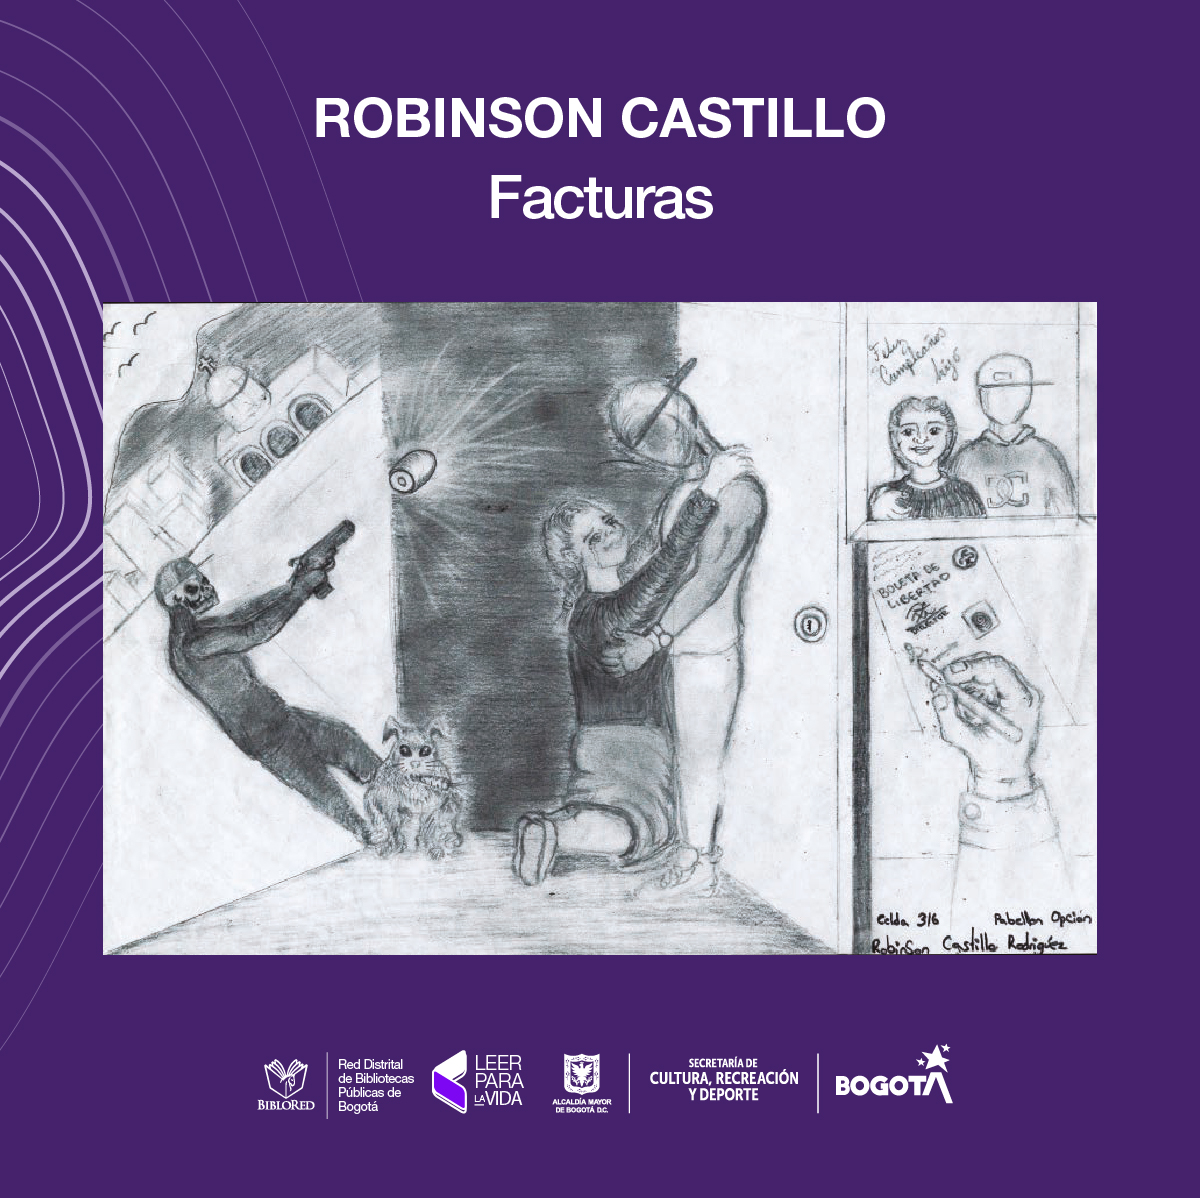 Robinson Castillo